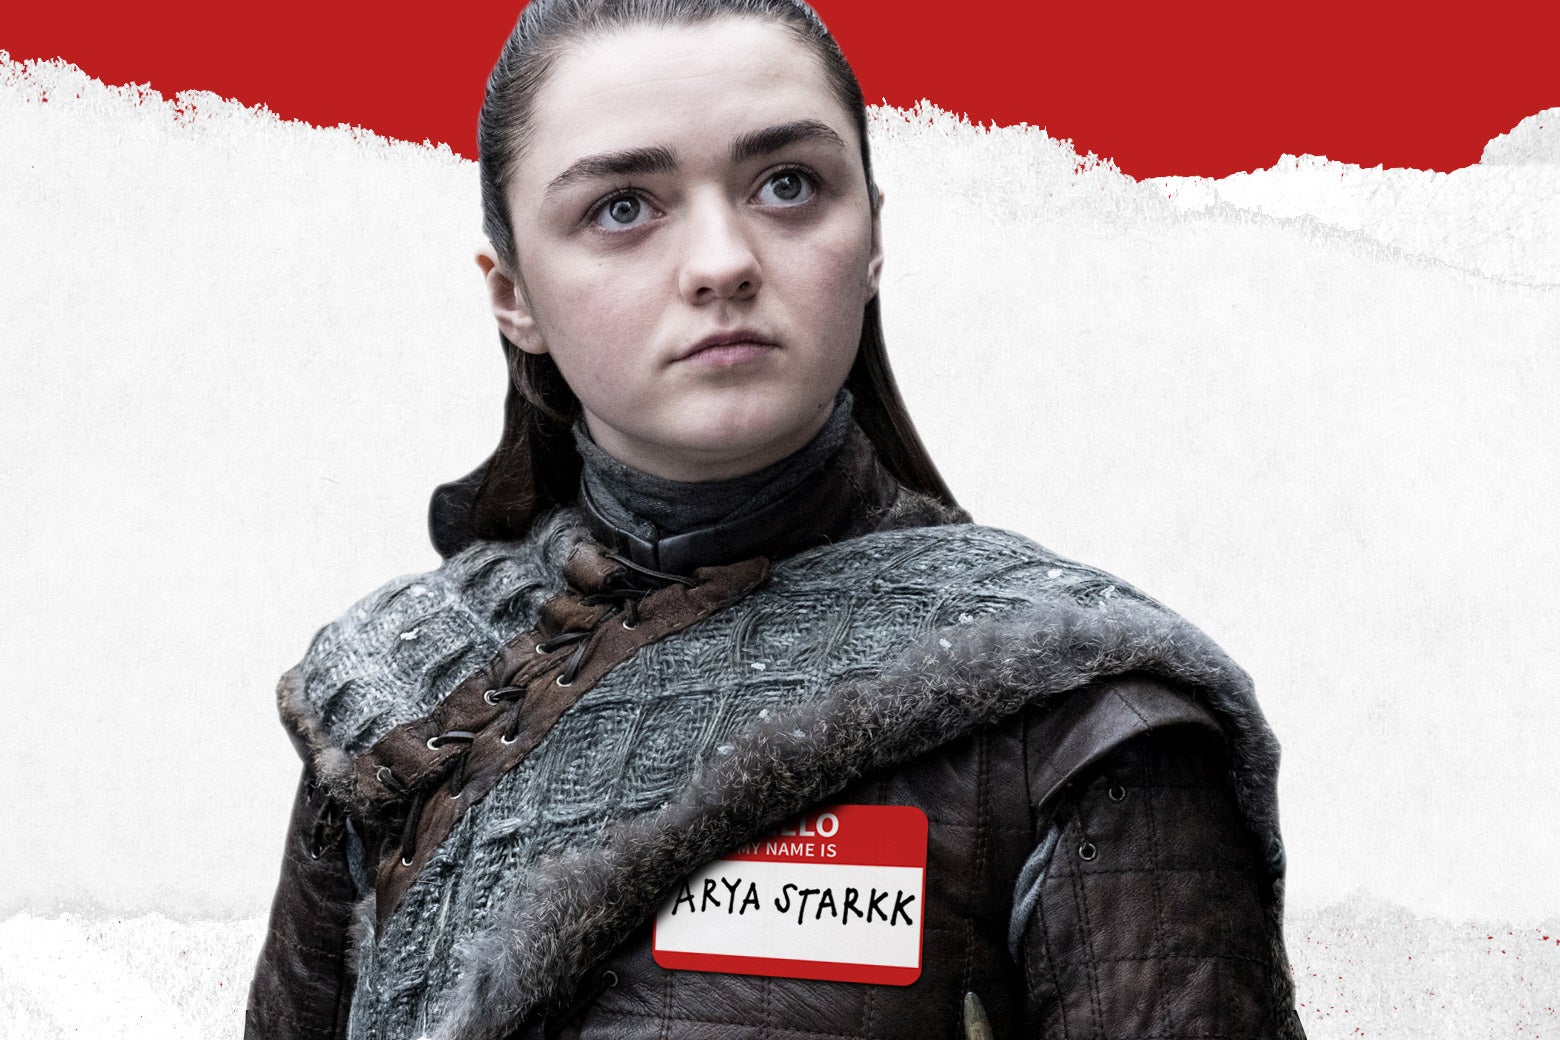 Arya Stark wearing a nametag.